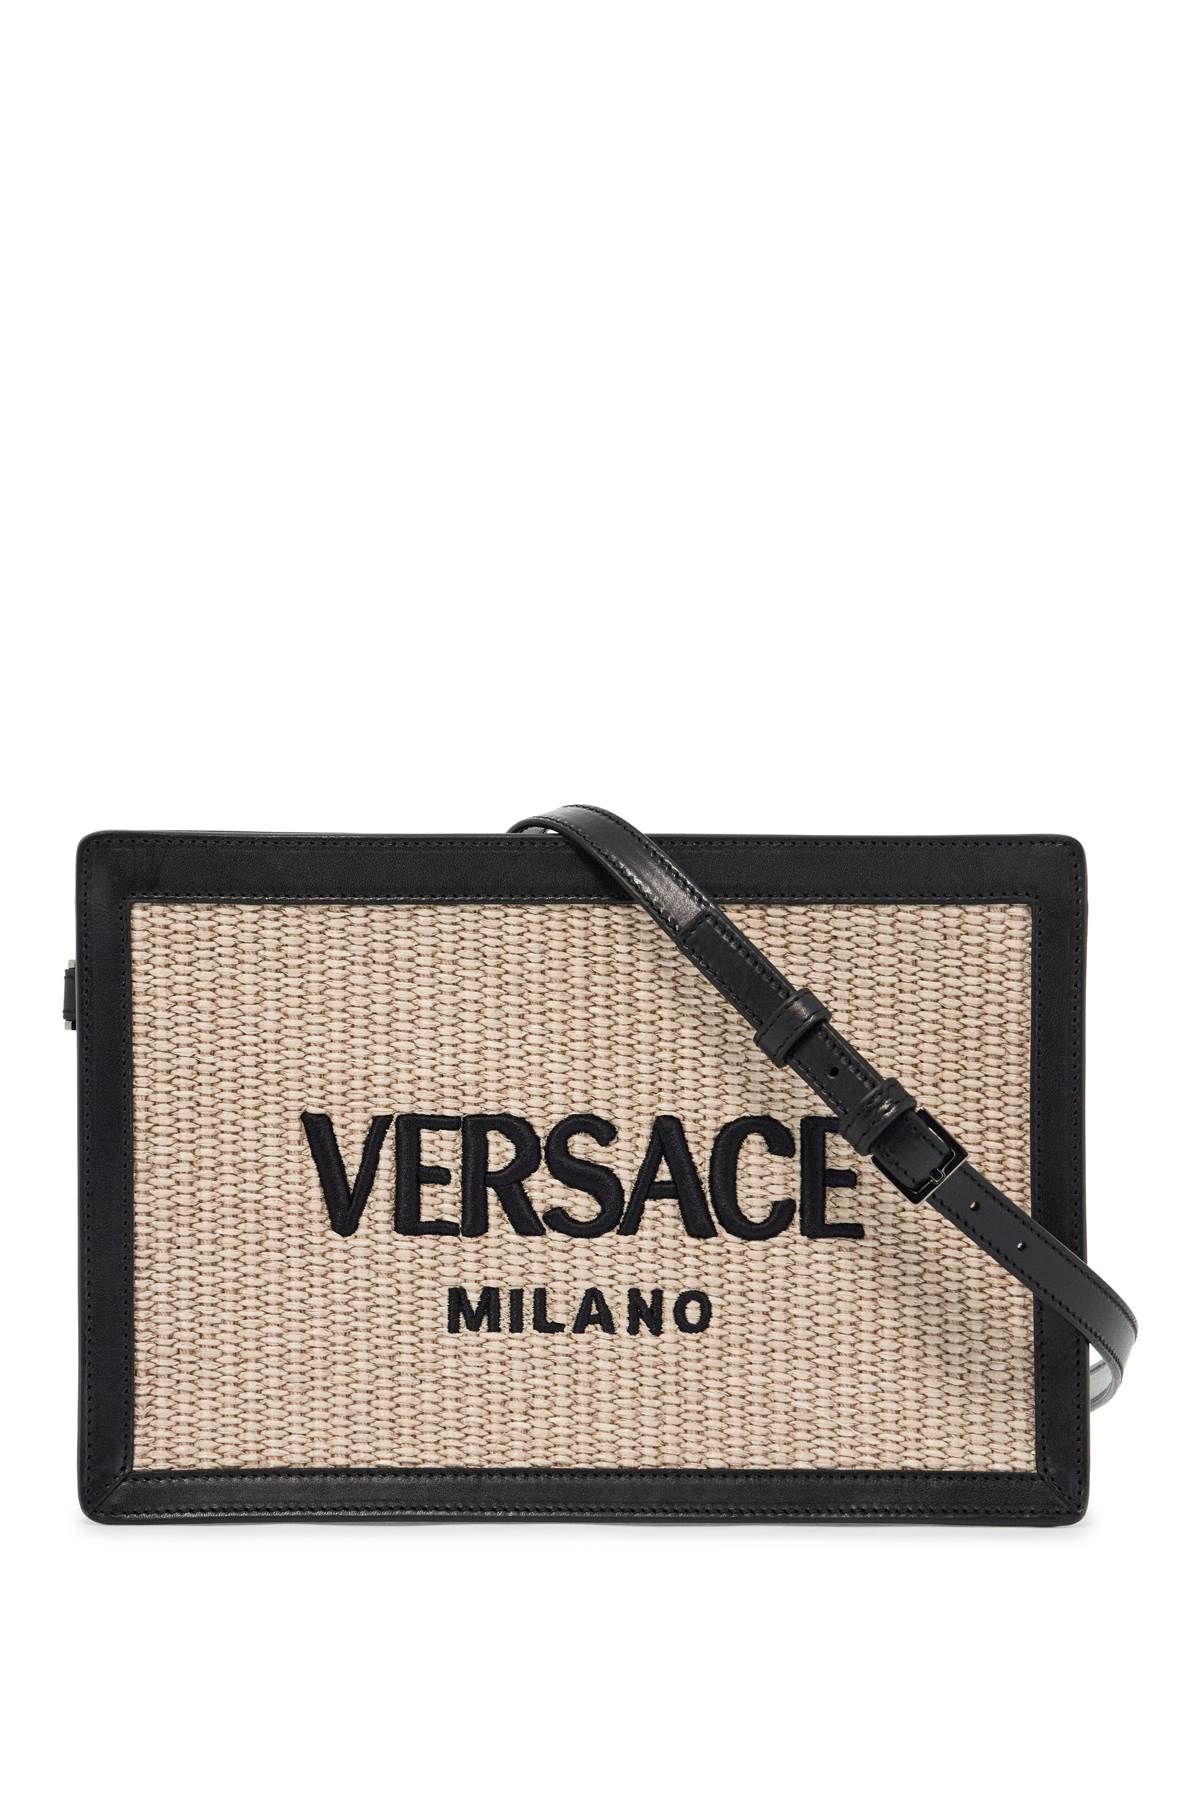 Versace VERSACE raffia pouch for